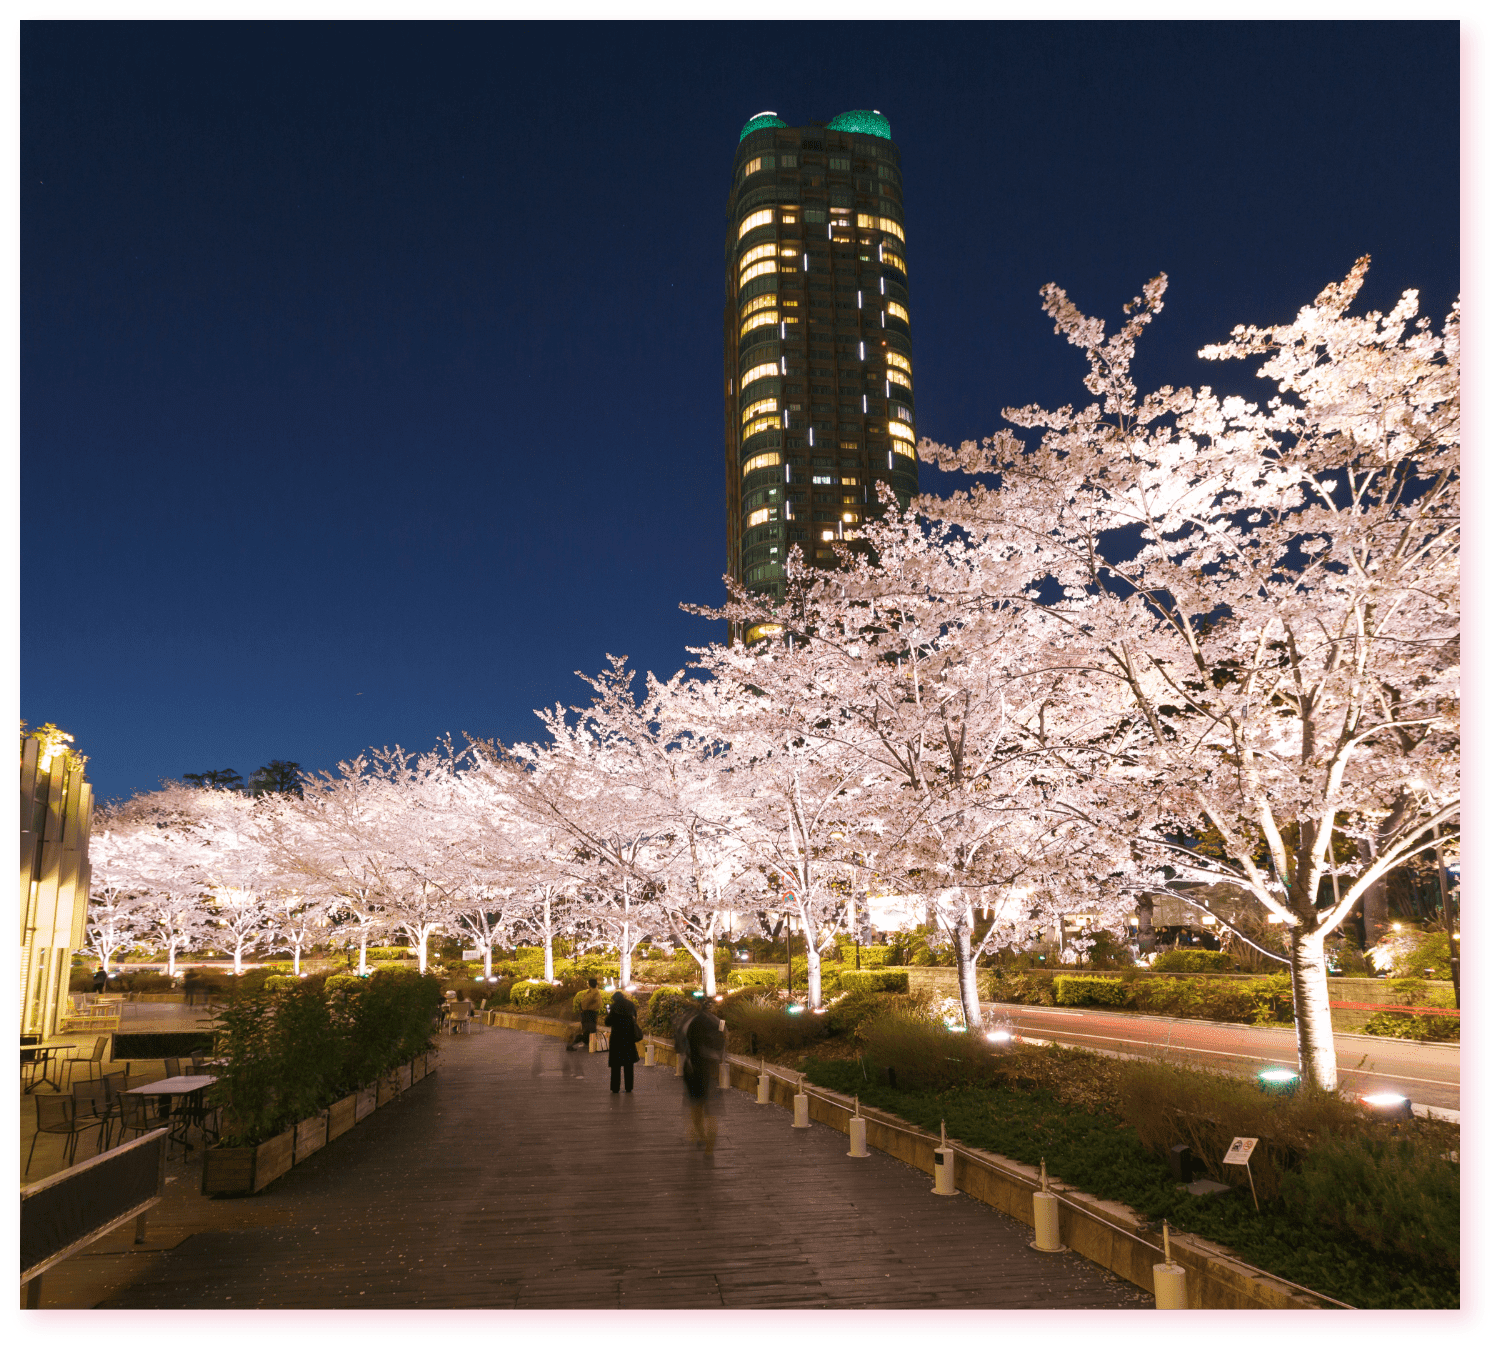 Cherry blossom night-time illumination